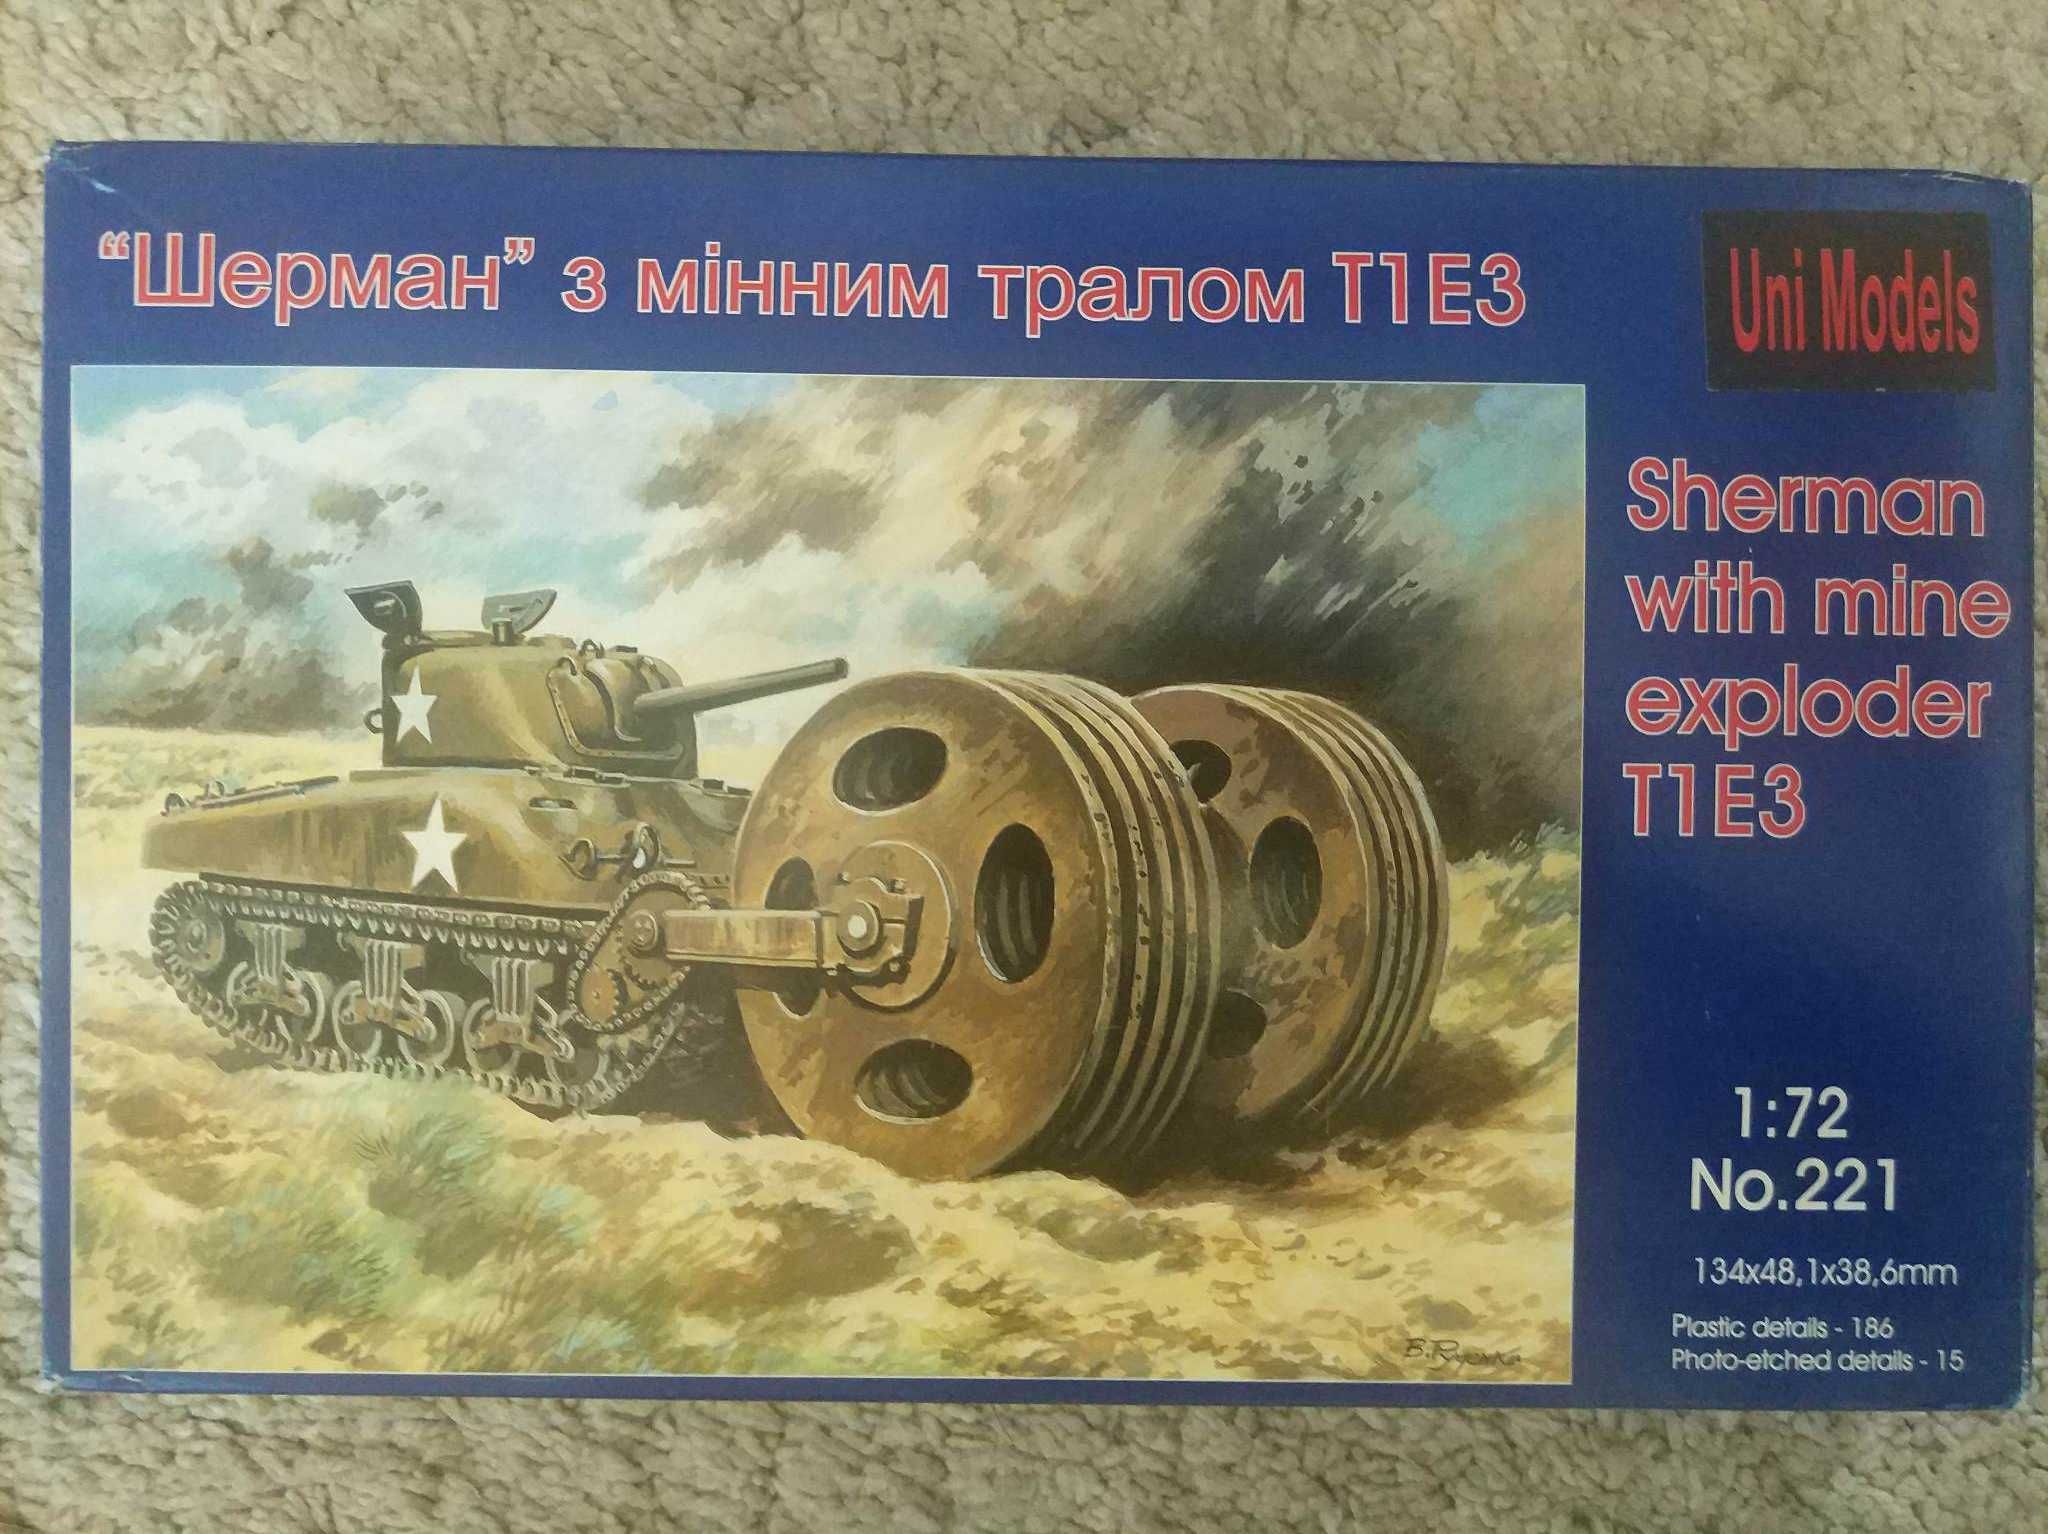 Unimodels UM 221 Sherman with mine exploder T1E3